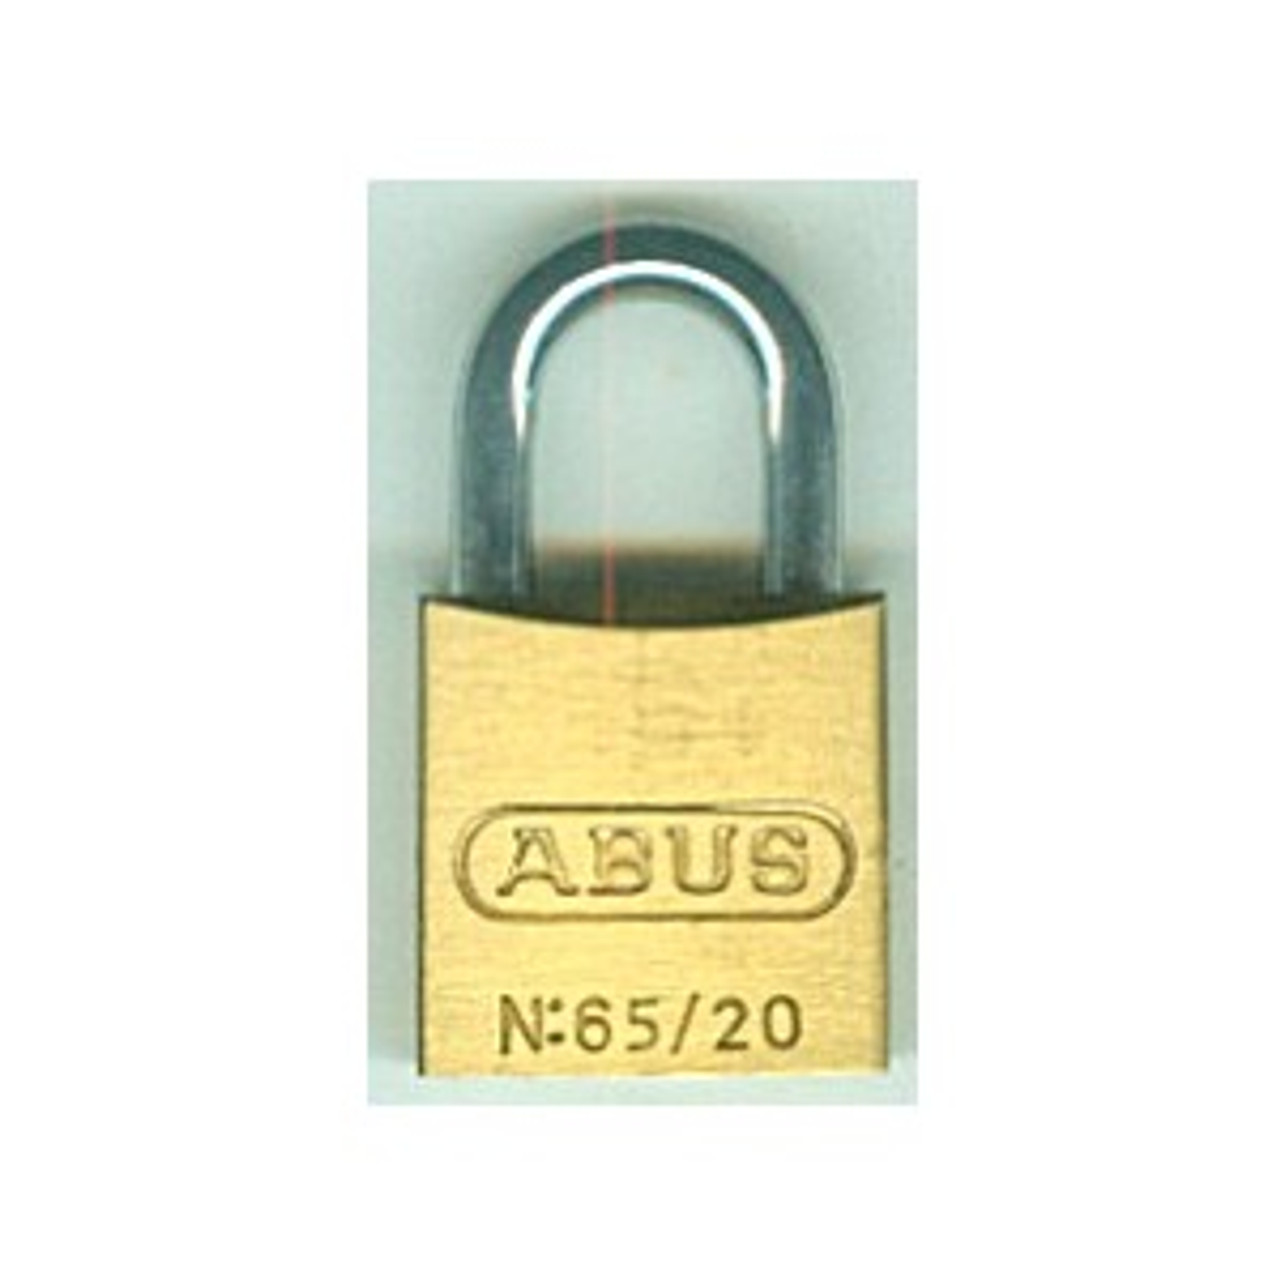 Review of the ABUS 65 Series Brass Padlocks 